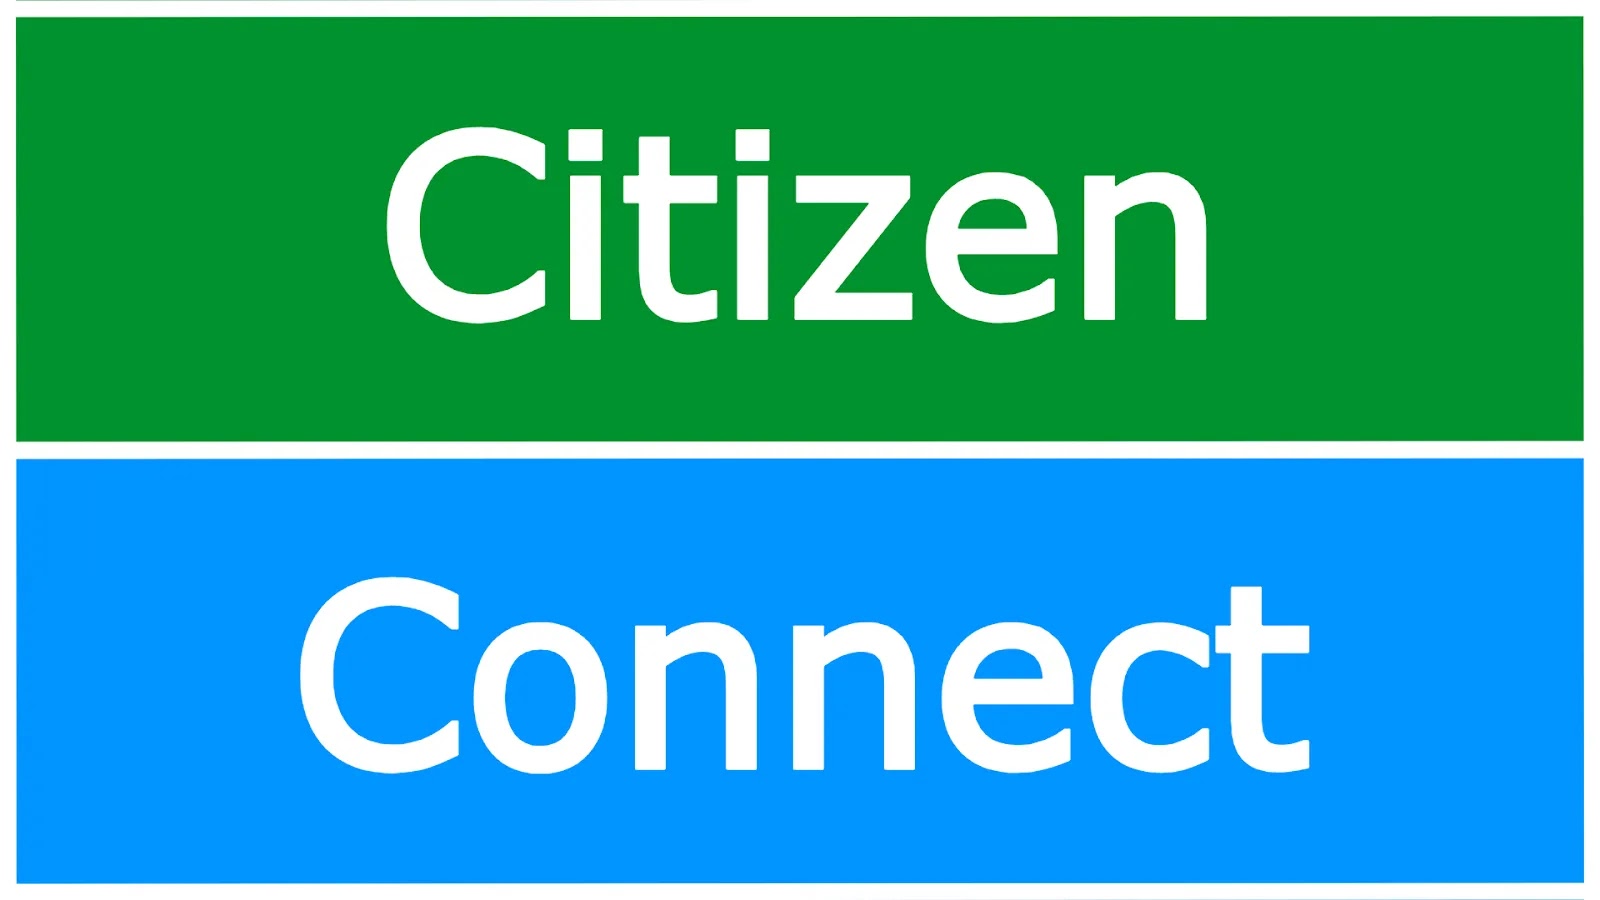 Citizen Connect Canada